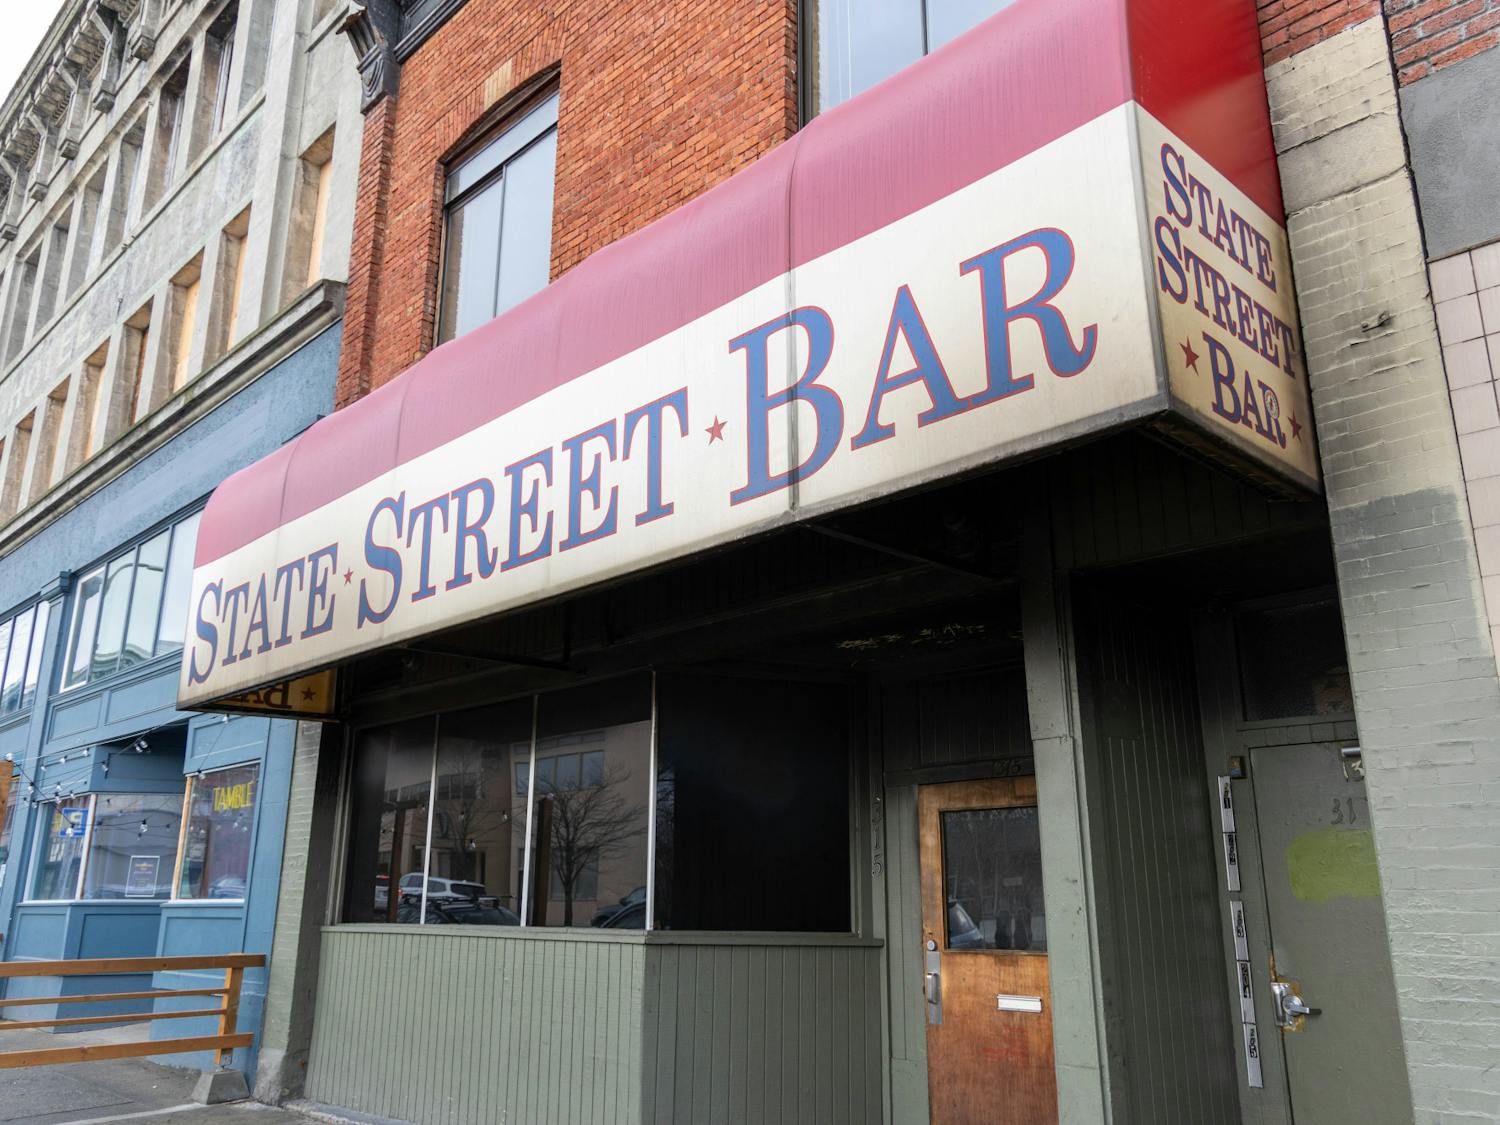 State Street Bar